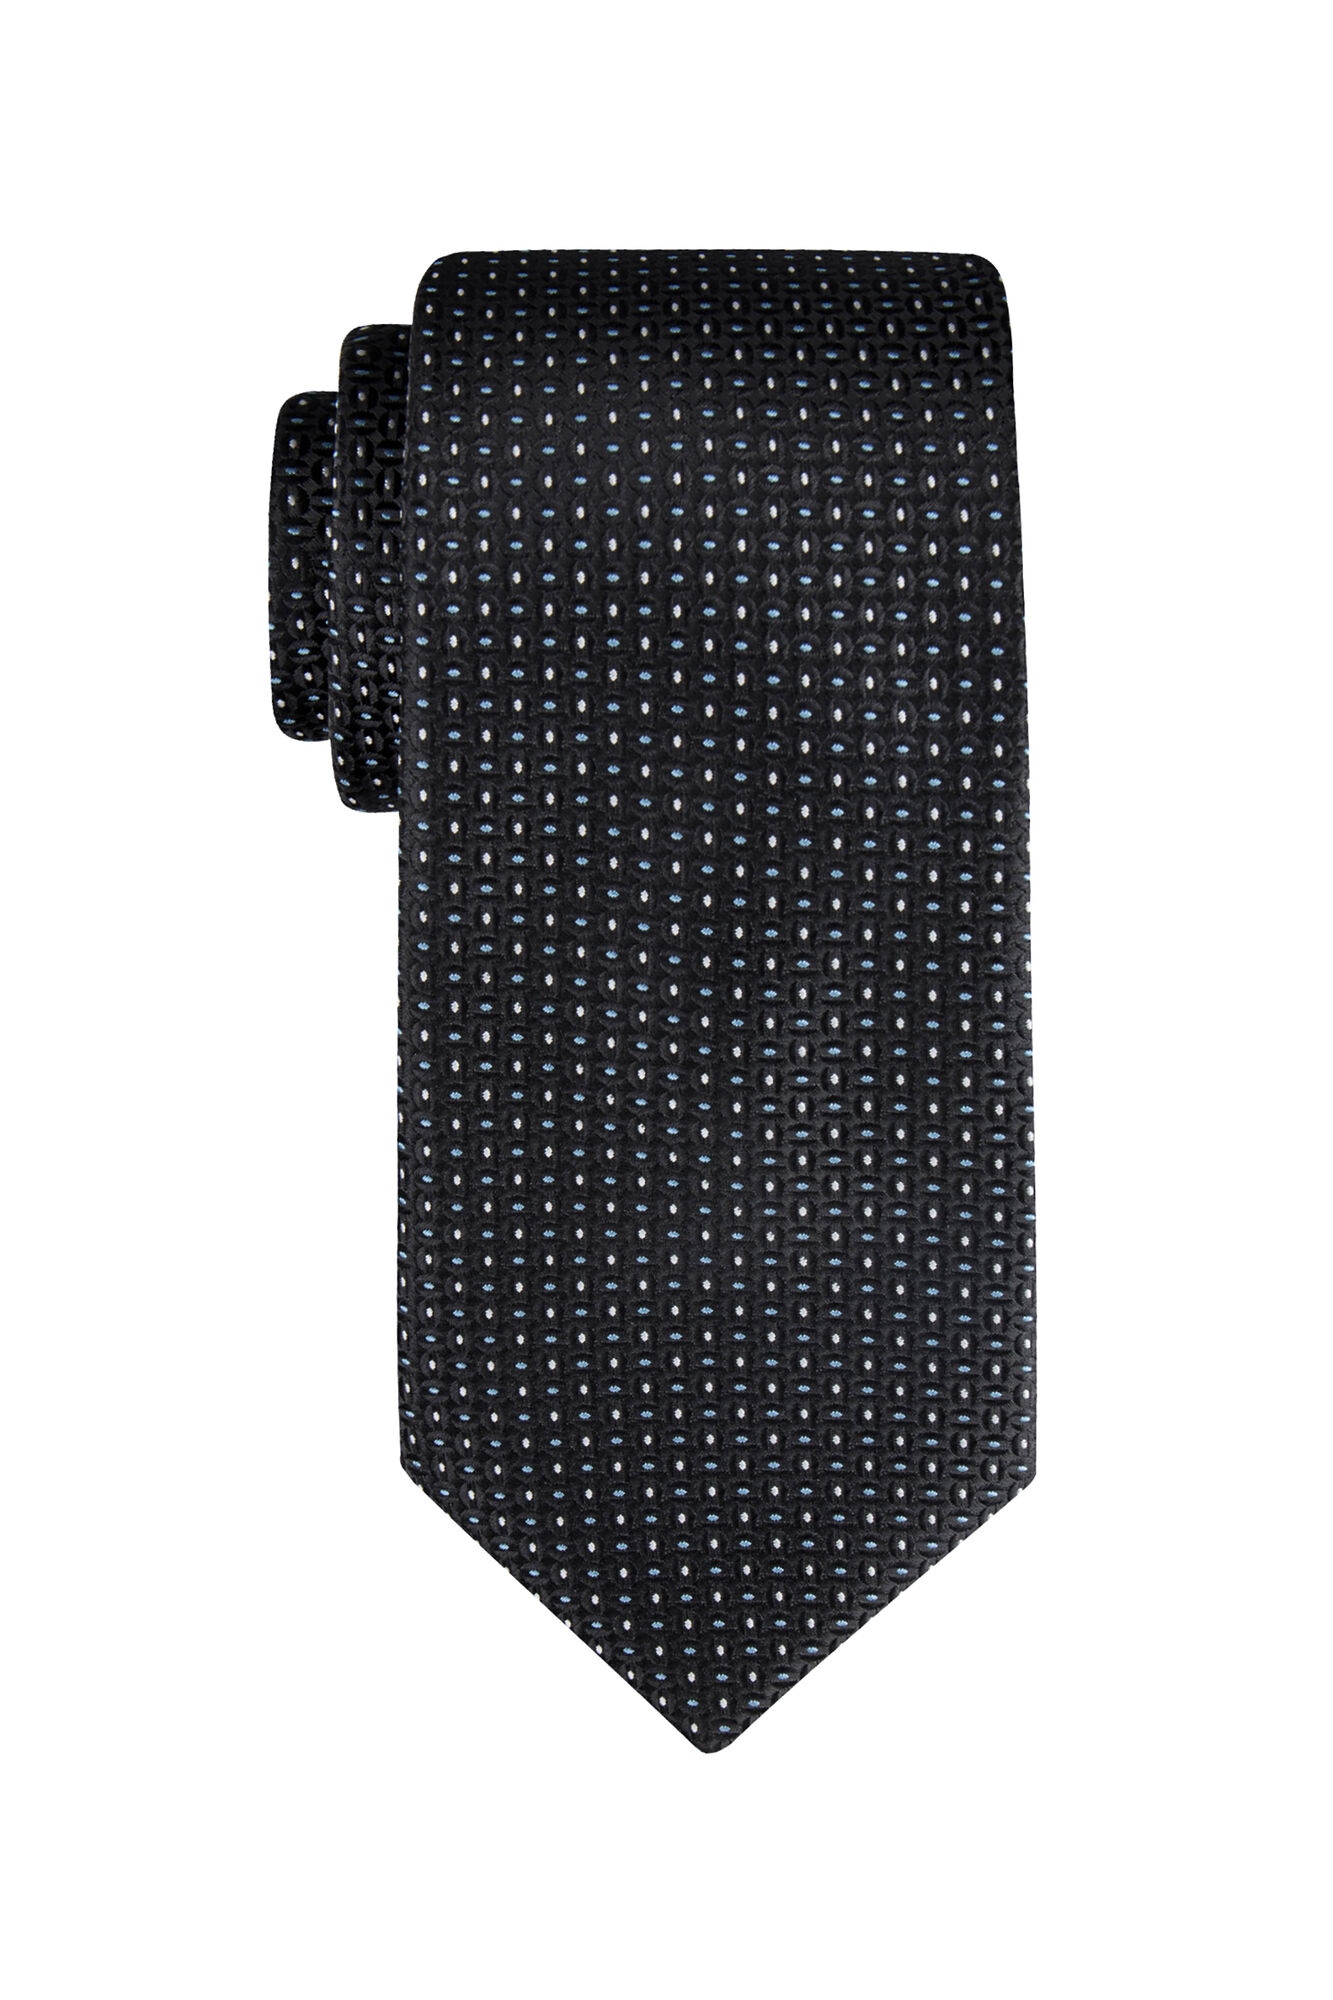 Haggar Micro Neat Tie Black (HH00100007) photo